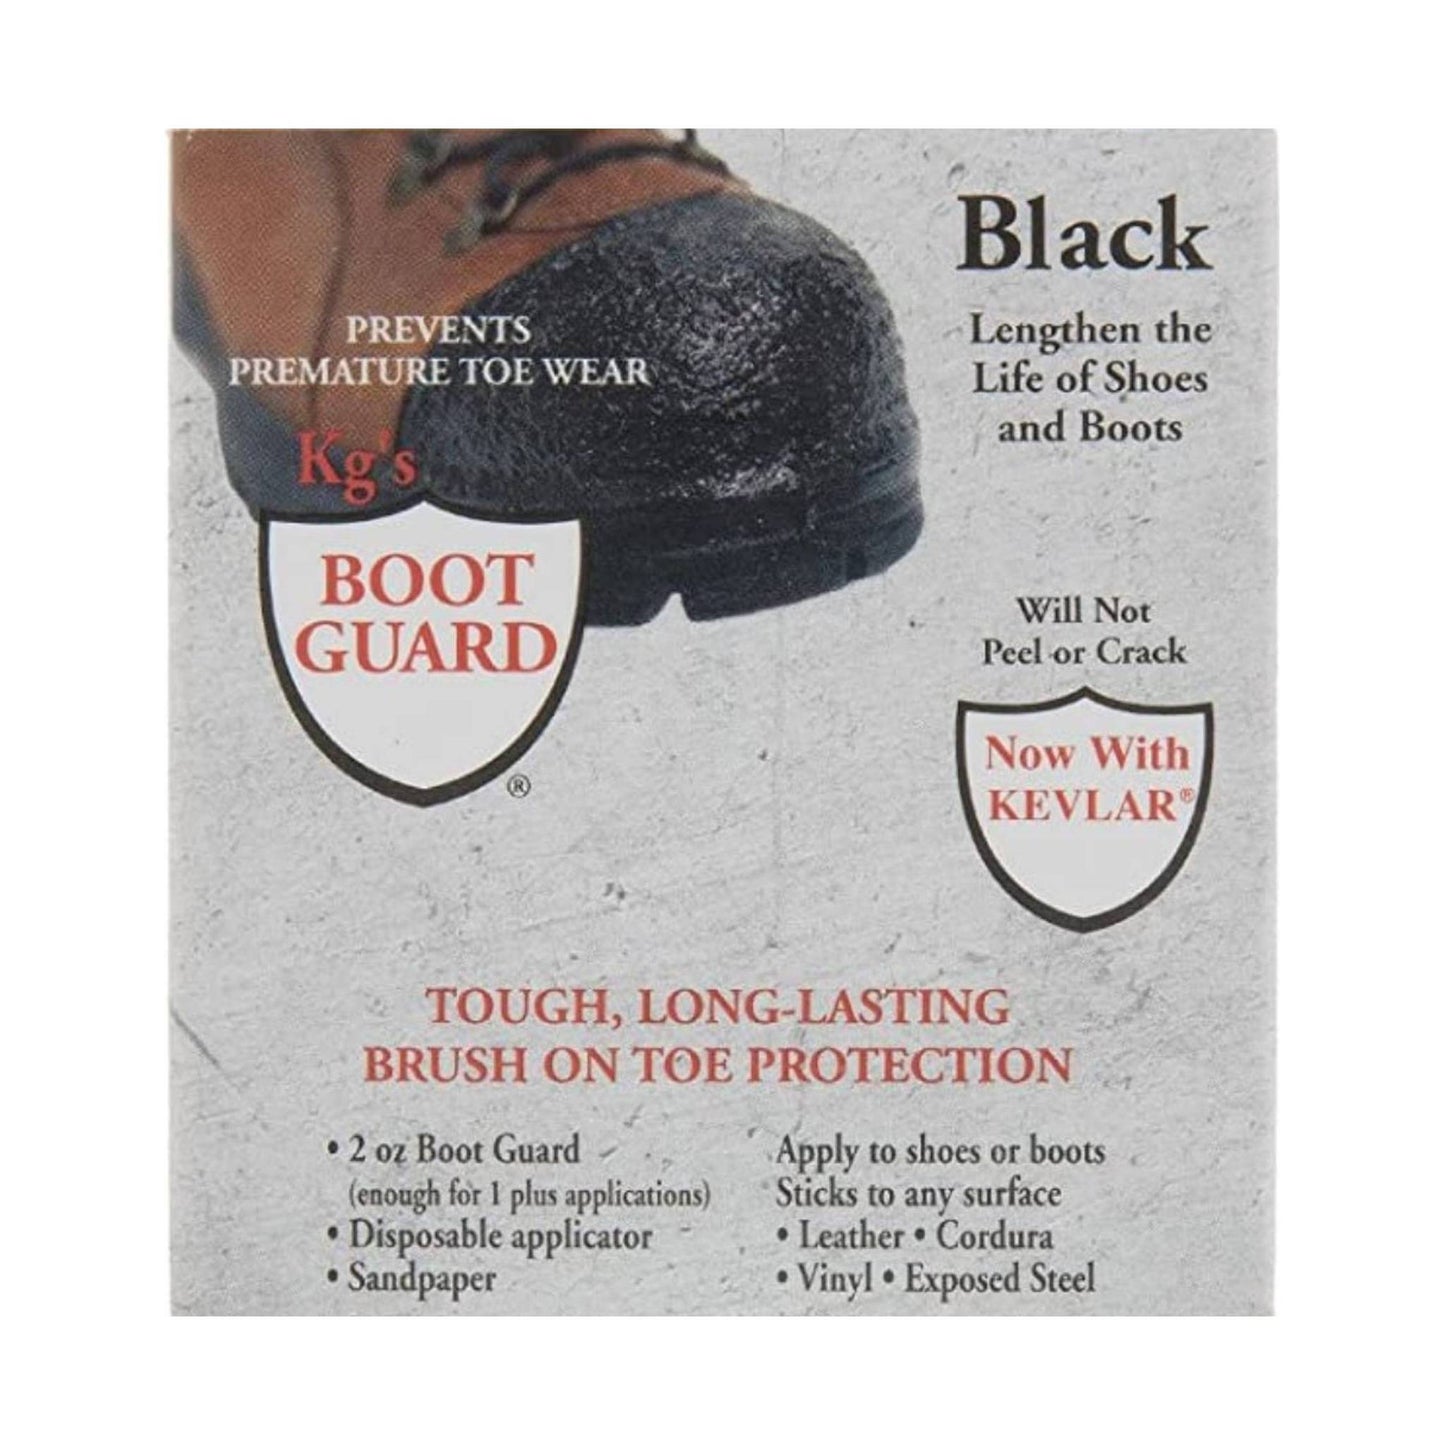 Kg's Boot Guard - Black